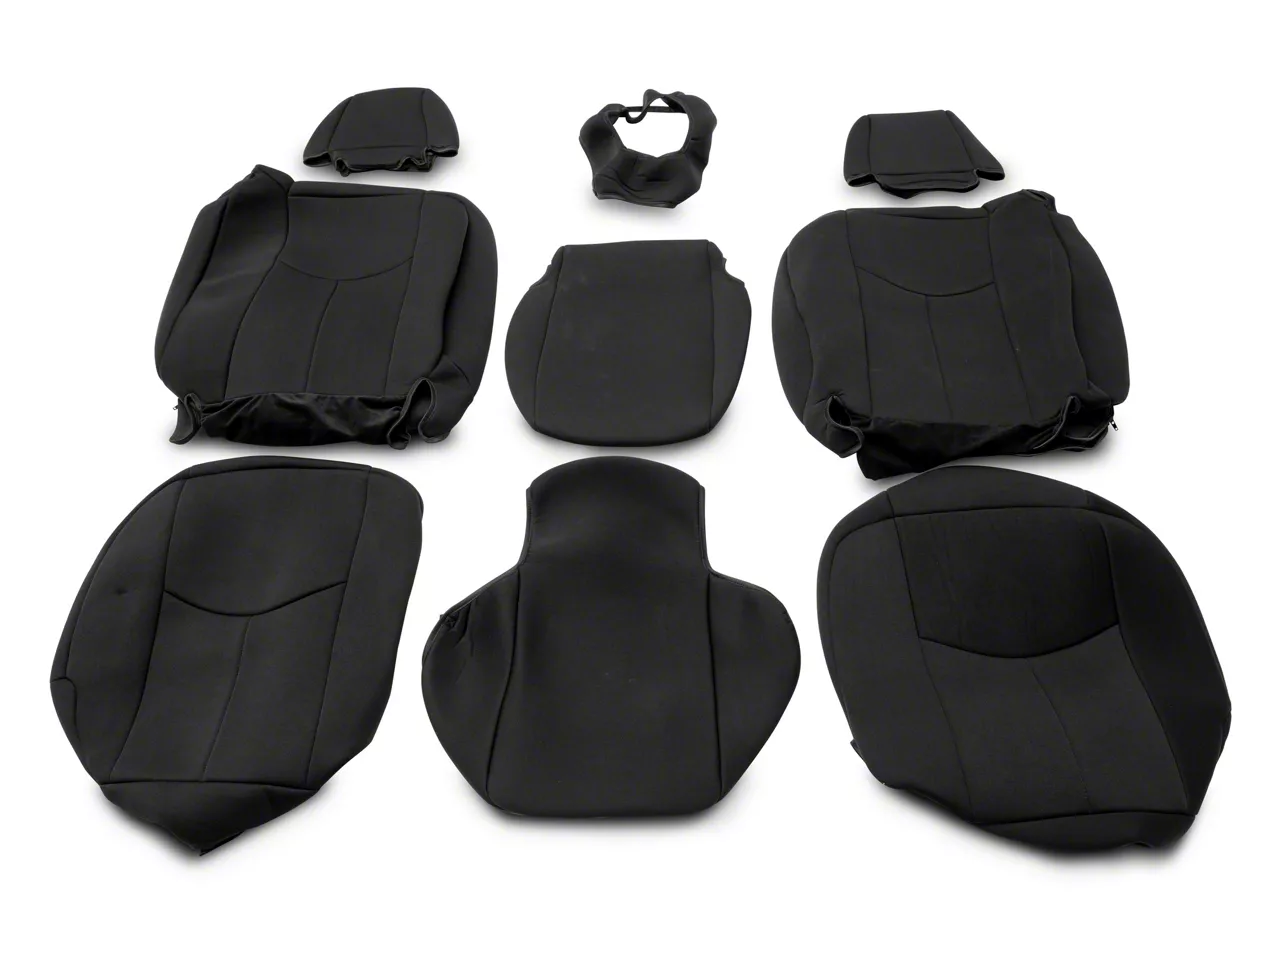 https://www.americantrucks.com/image/proven-ground-silverado1500-premium-neoprene-front-rear-seat-covers-black-s121329.S121329.jpg